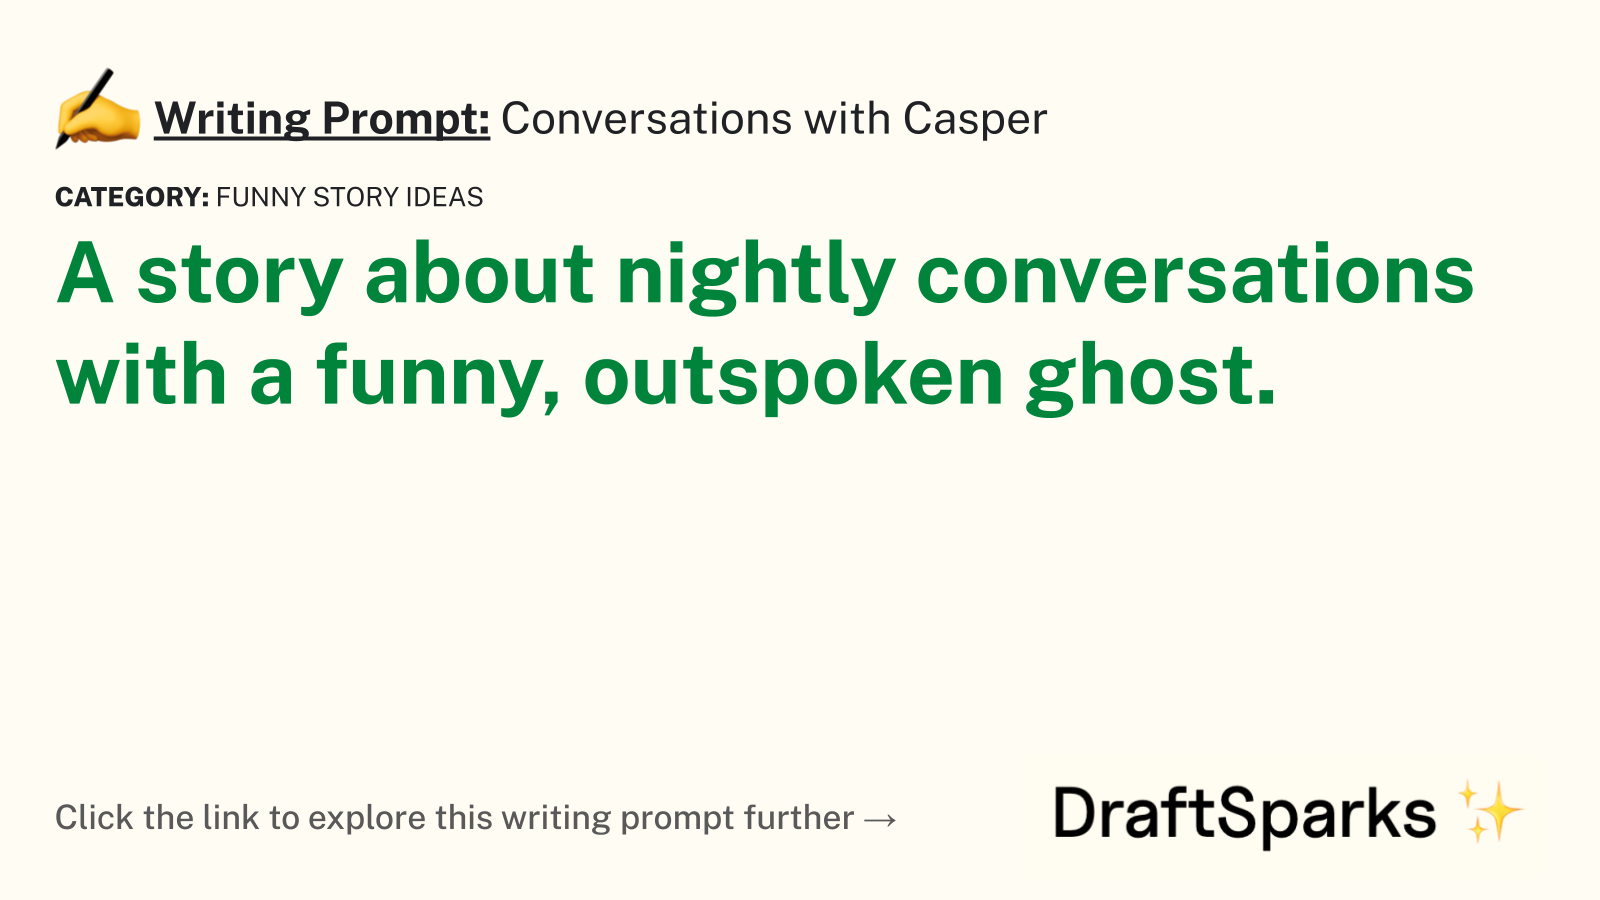 Conversations with Casper